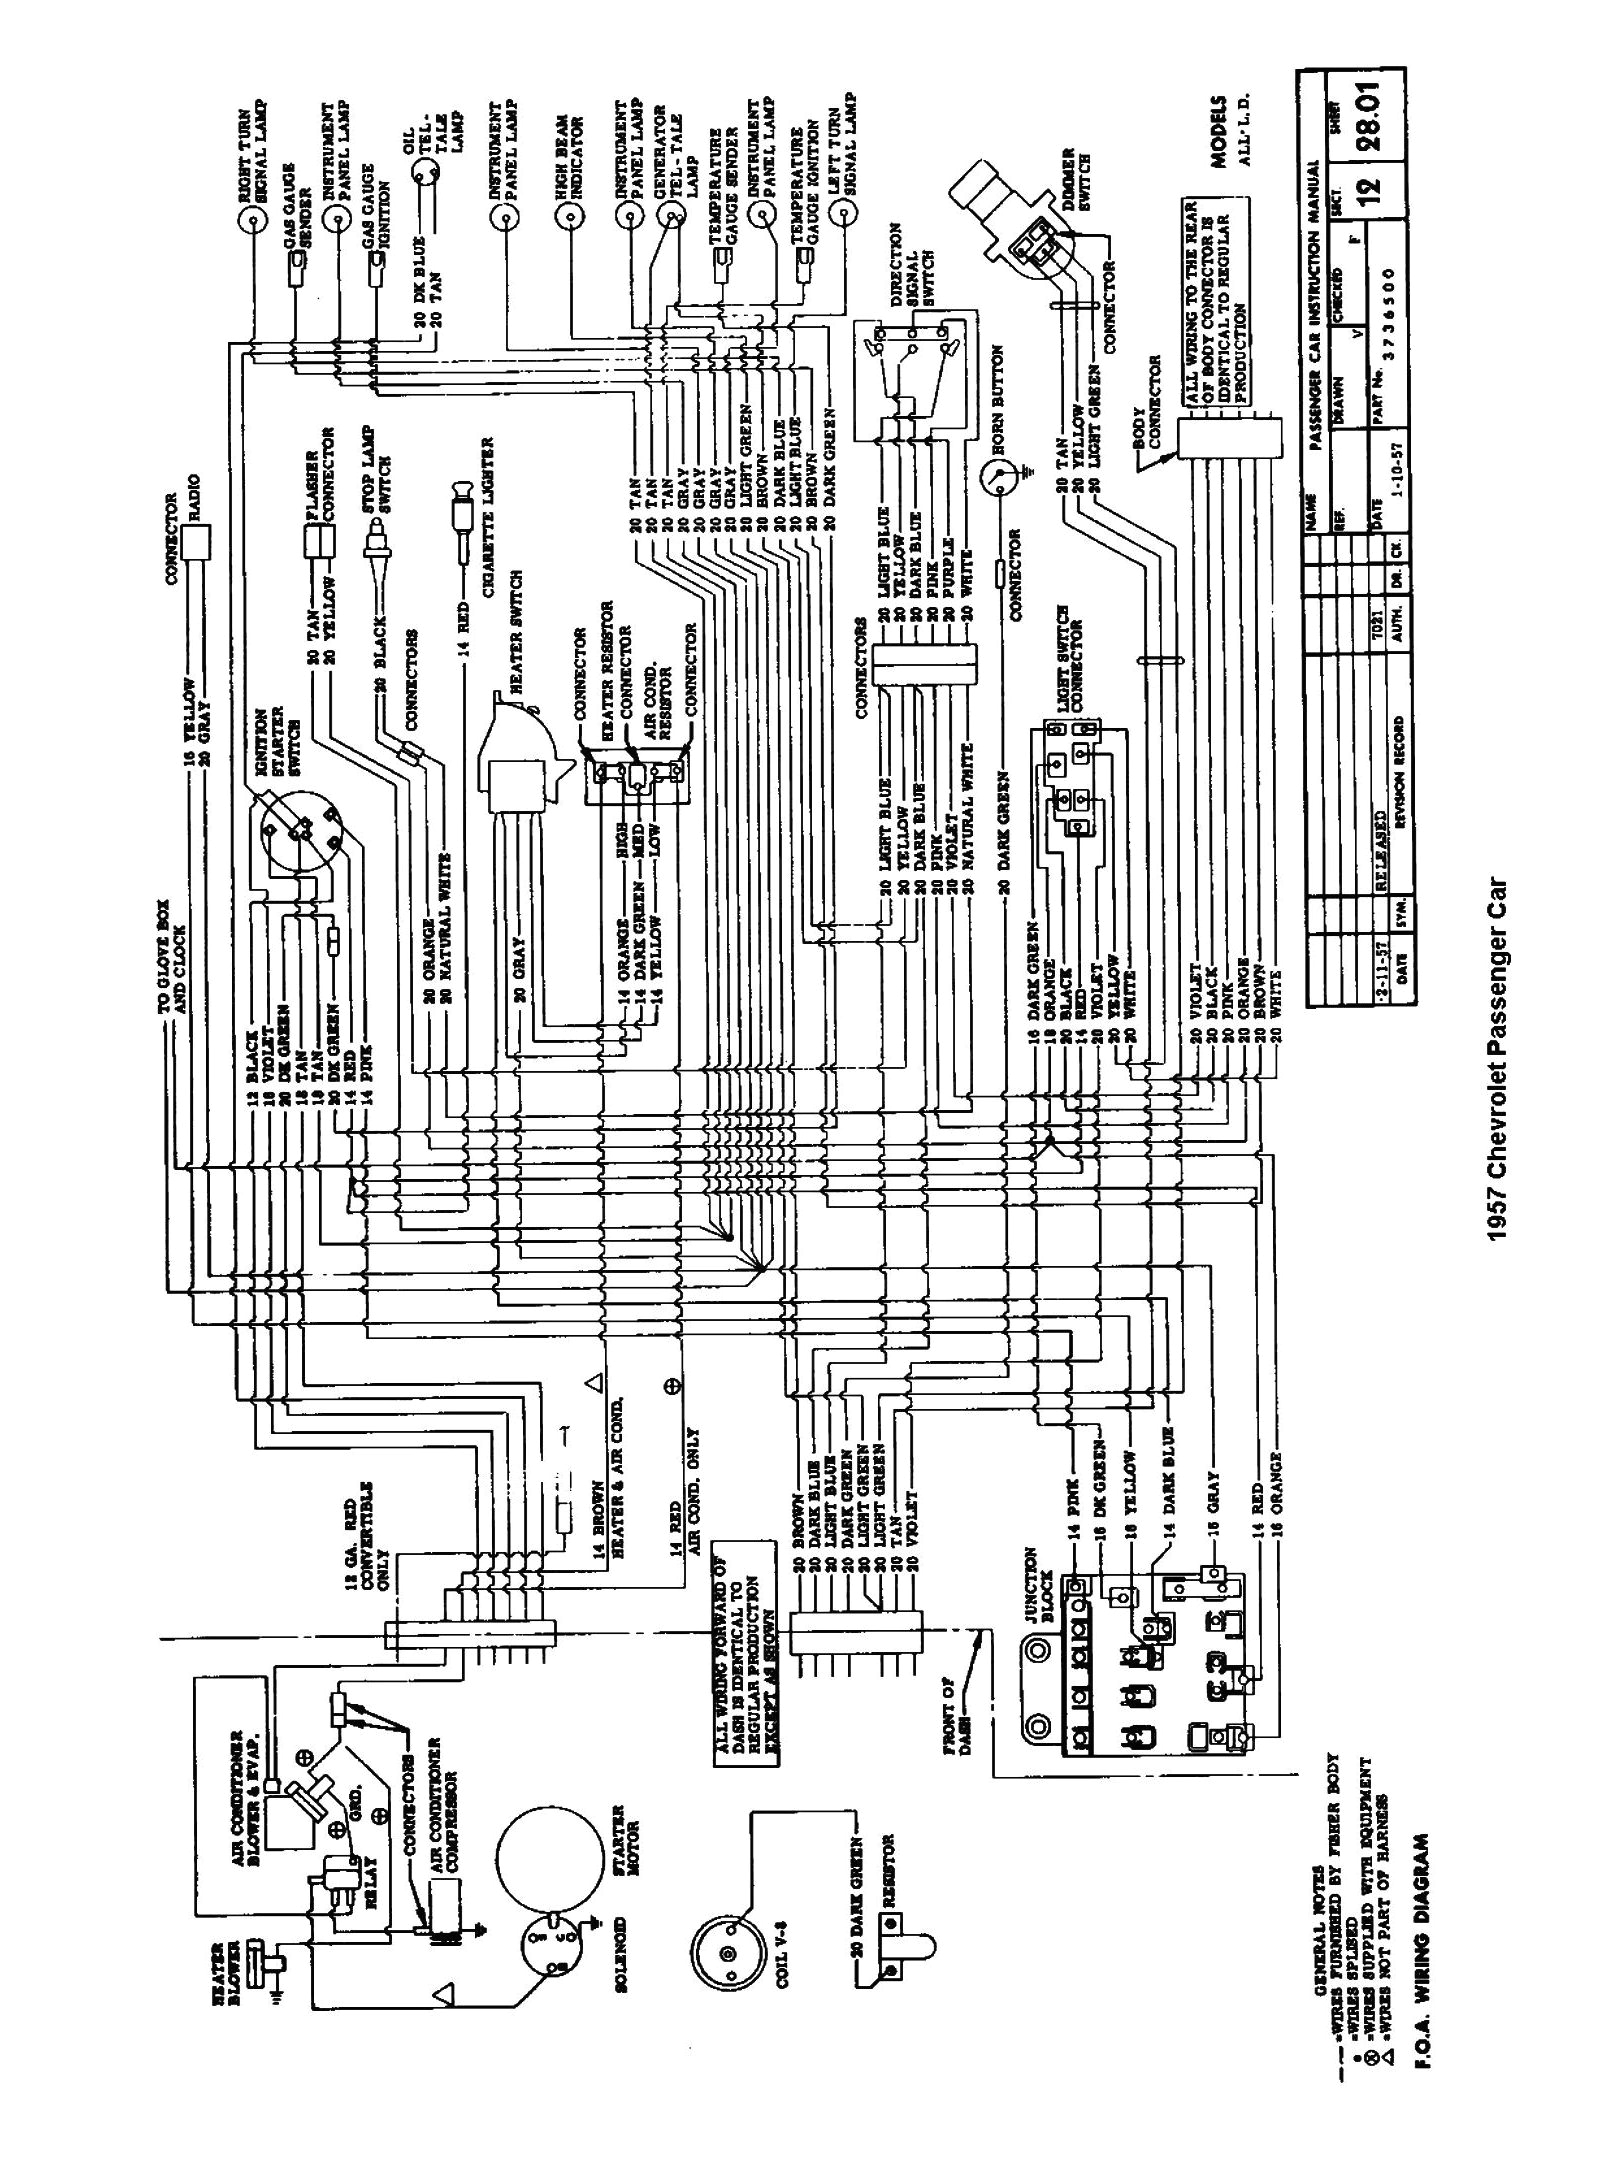 57 chevy wiring diagram blog wiring diagram 57 chevy truck wiring the hamb